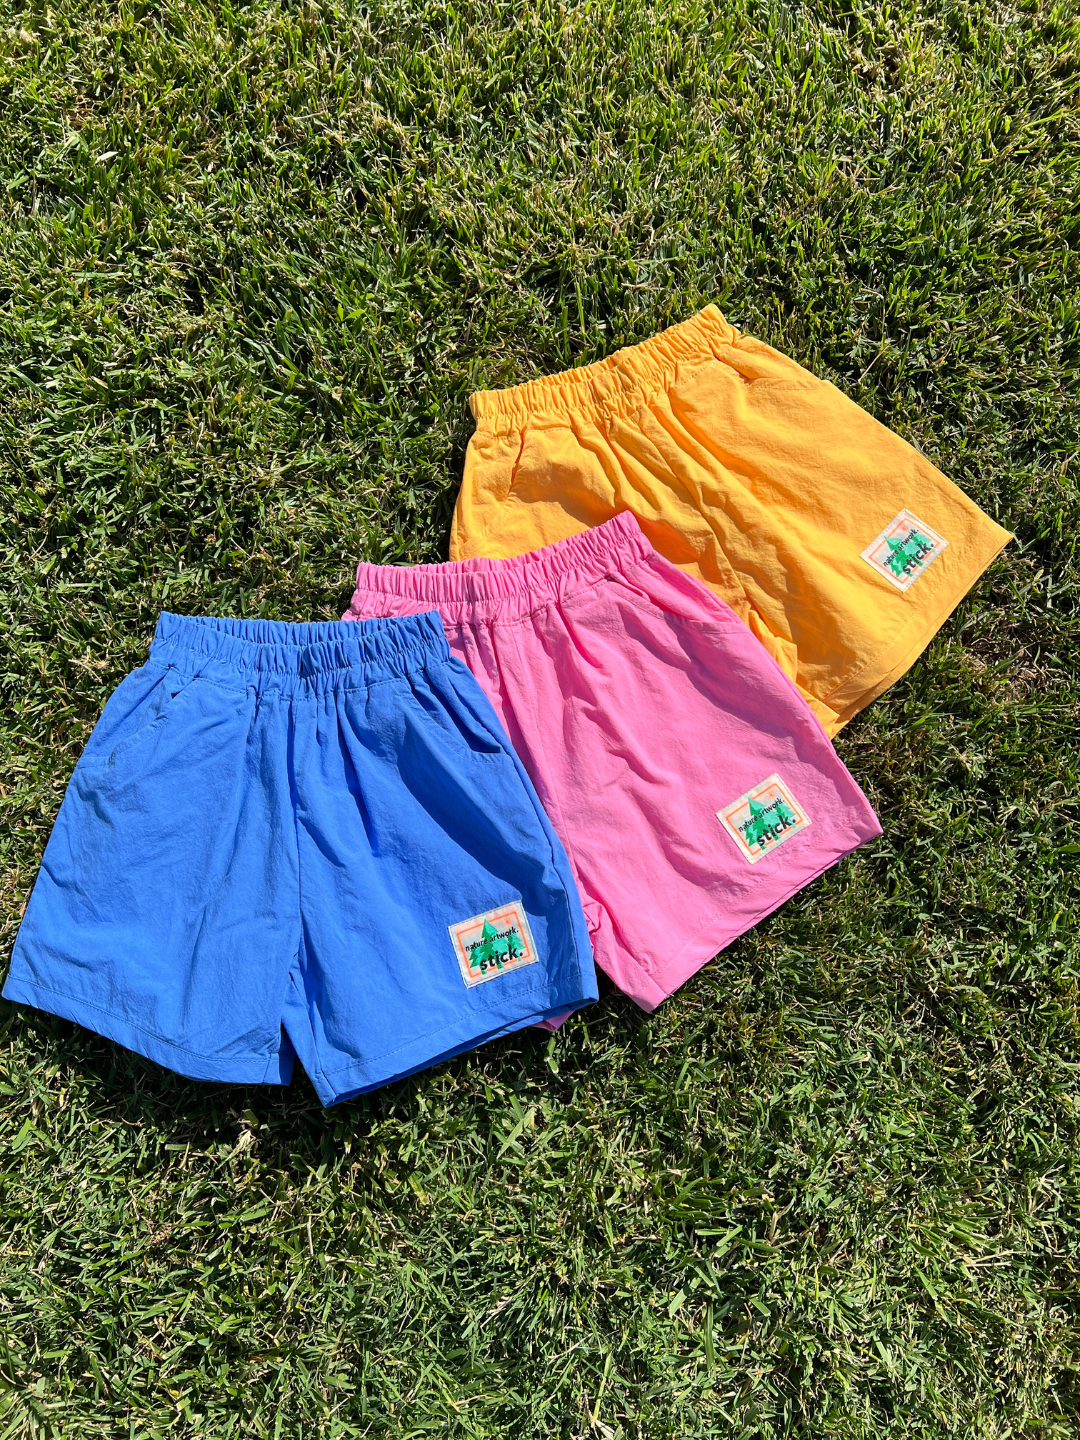 Blue, pink and orange kids' shorts arranged on grass.